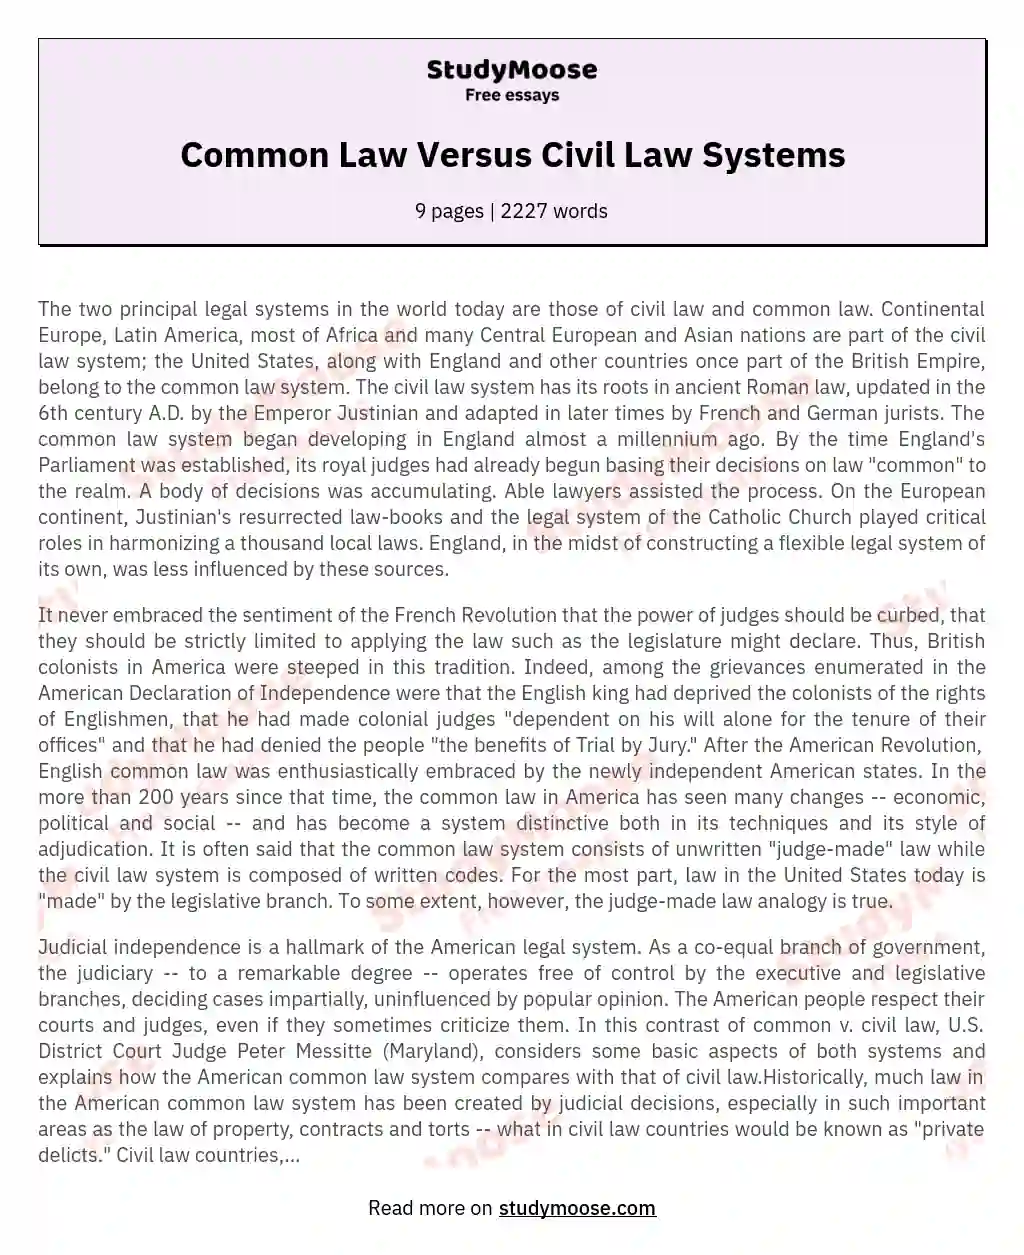 Common Law Versus Civil Law Systems essay